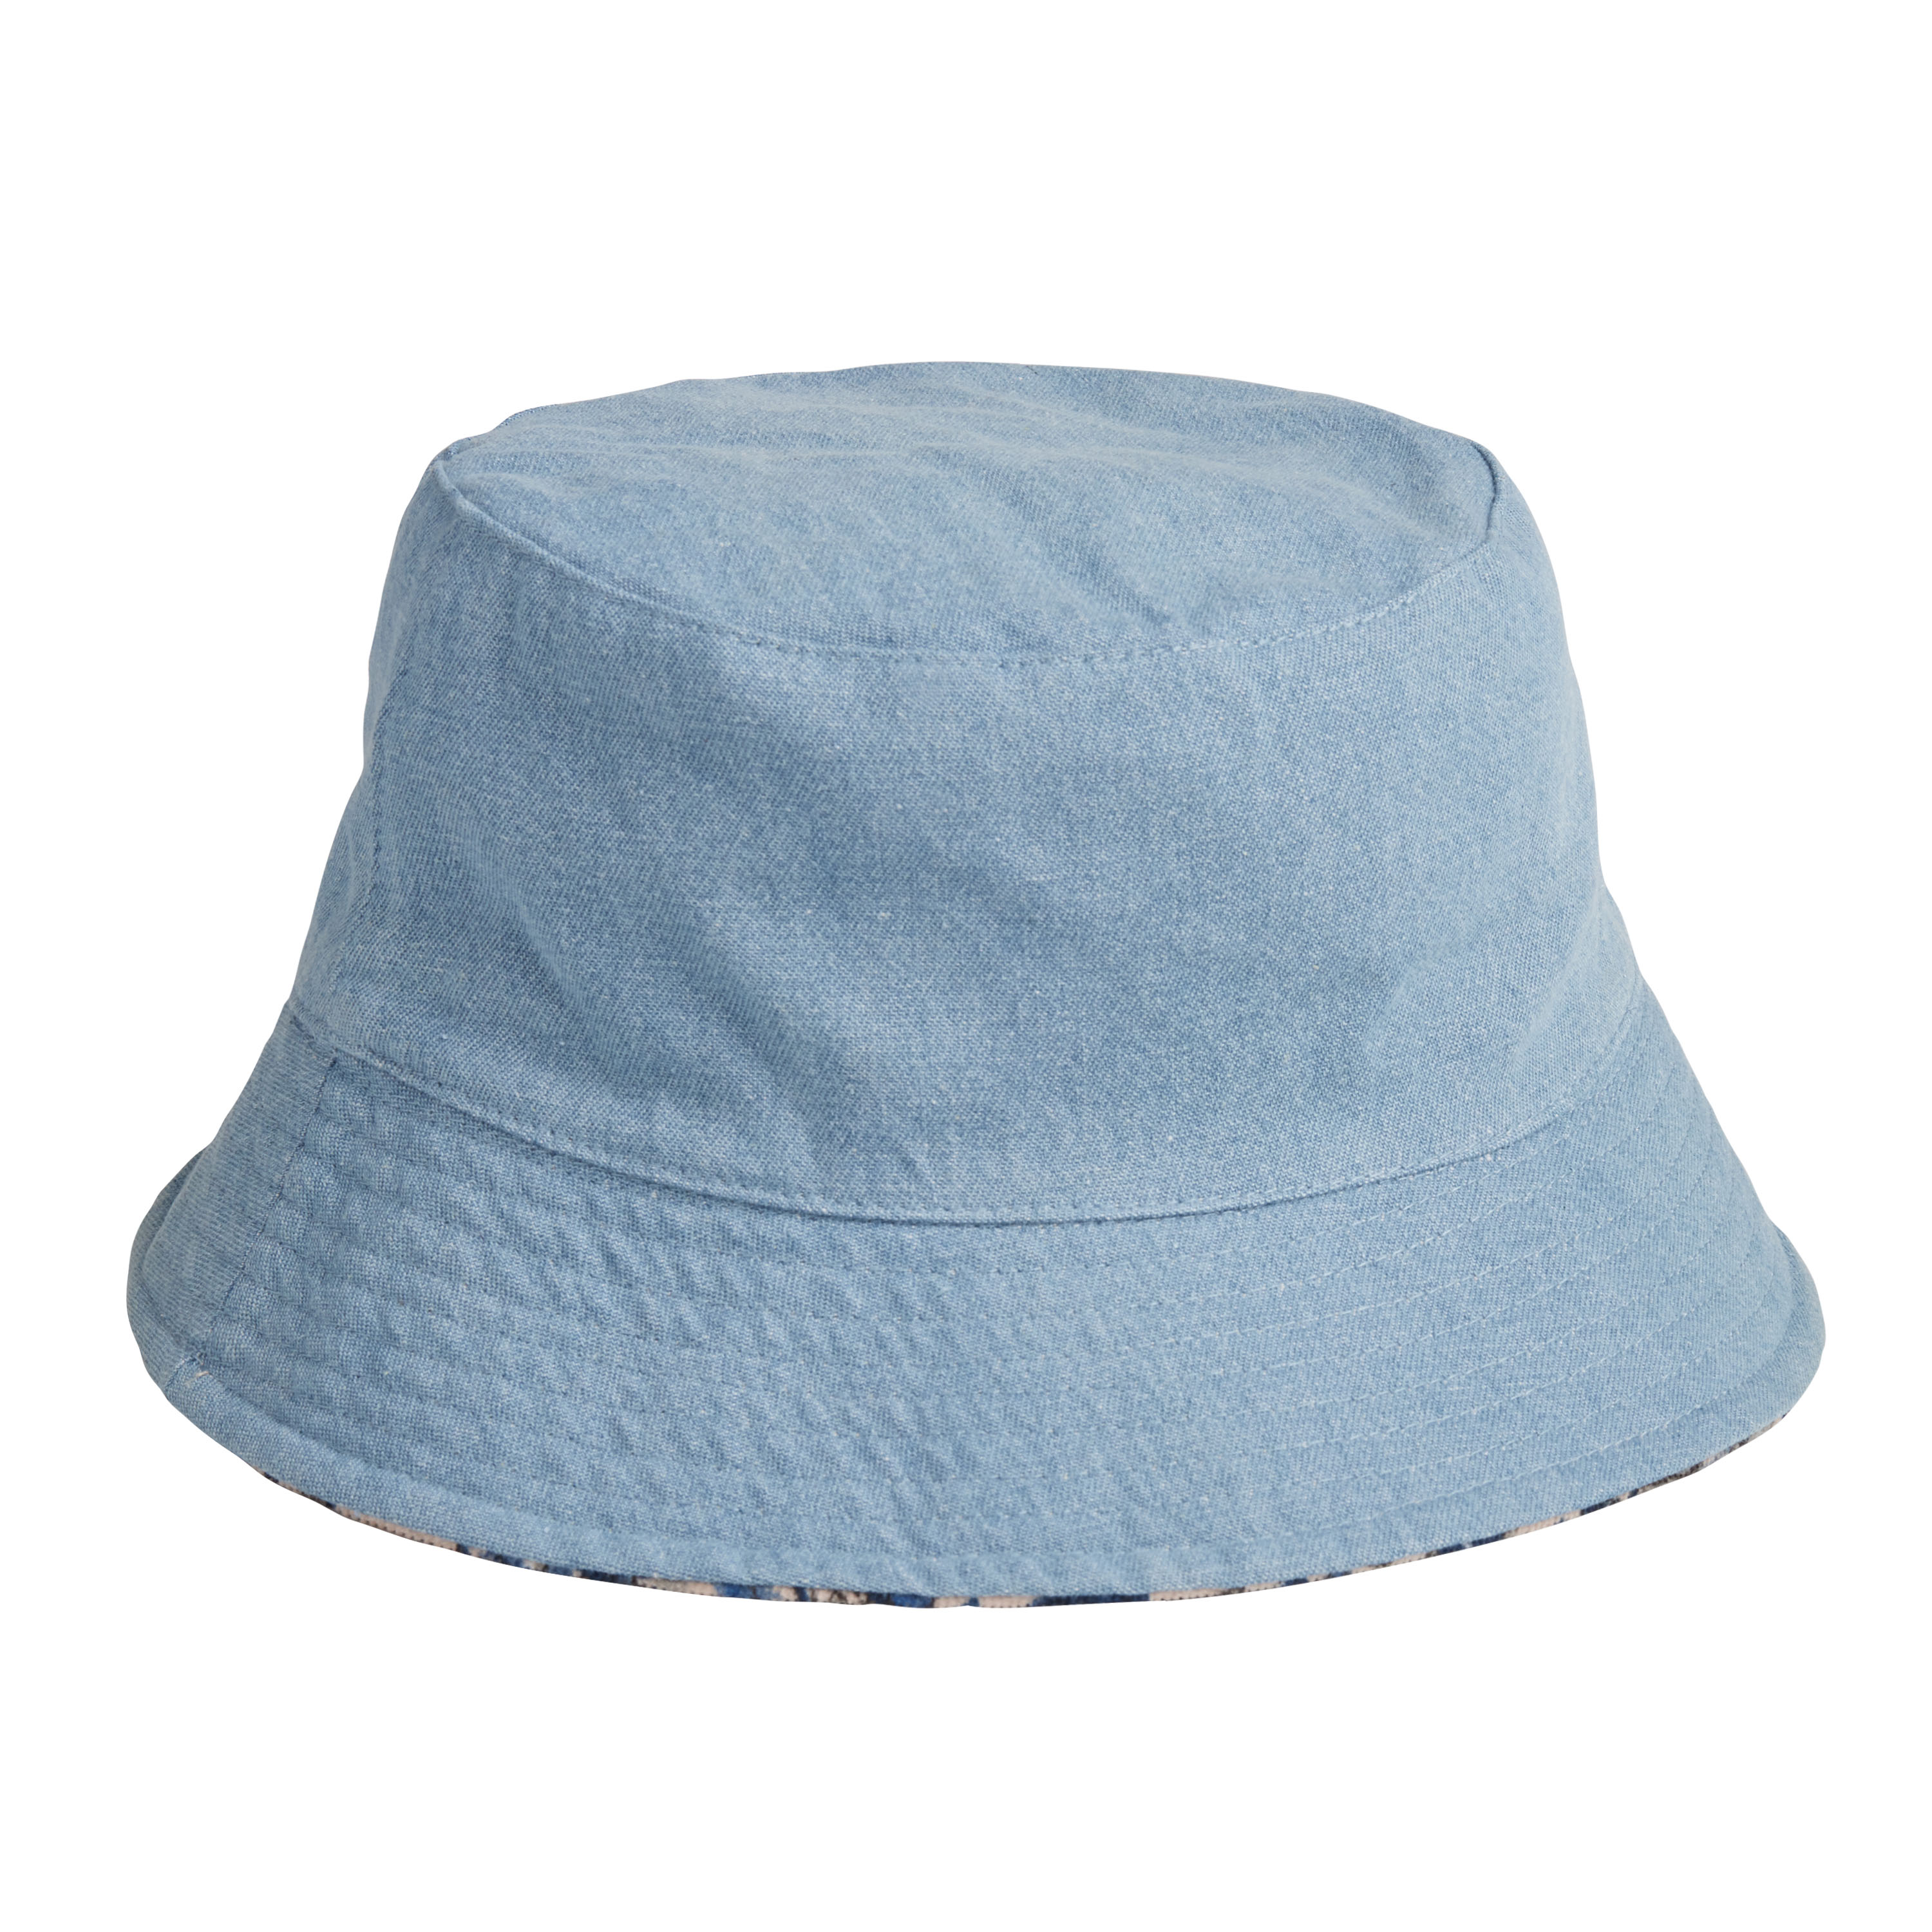 Faux Denim And Blue Floral Reversible Bucket Hat - World Market